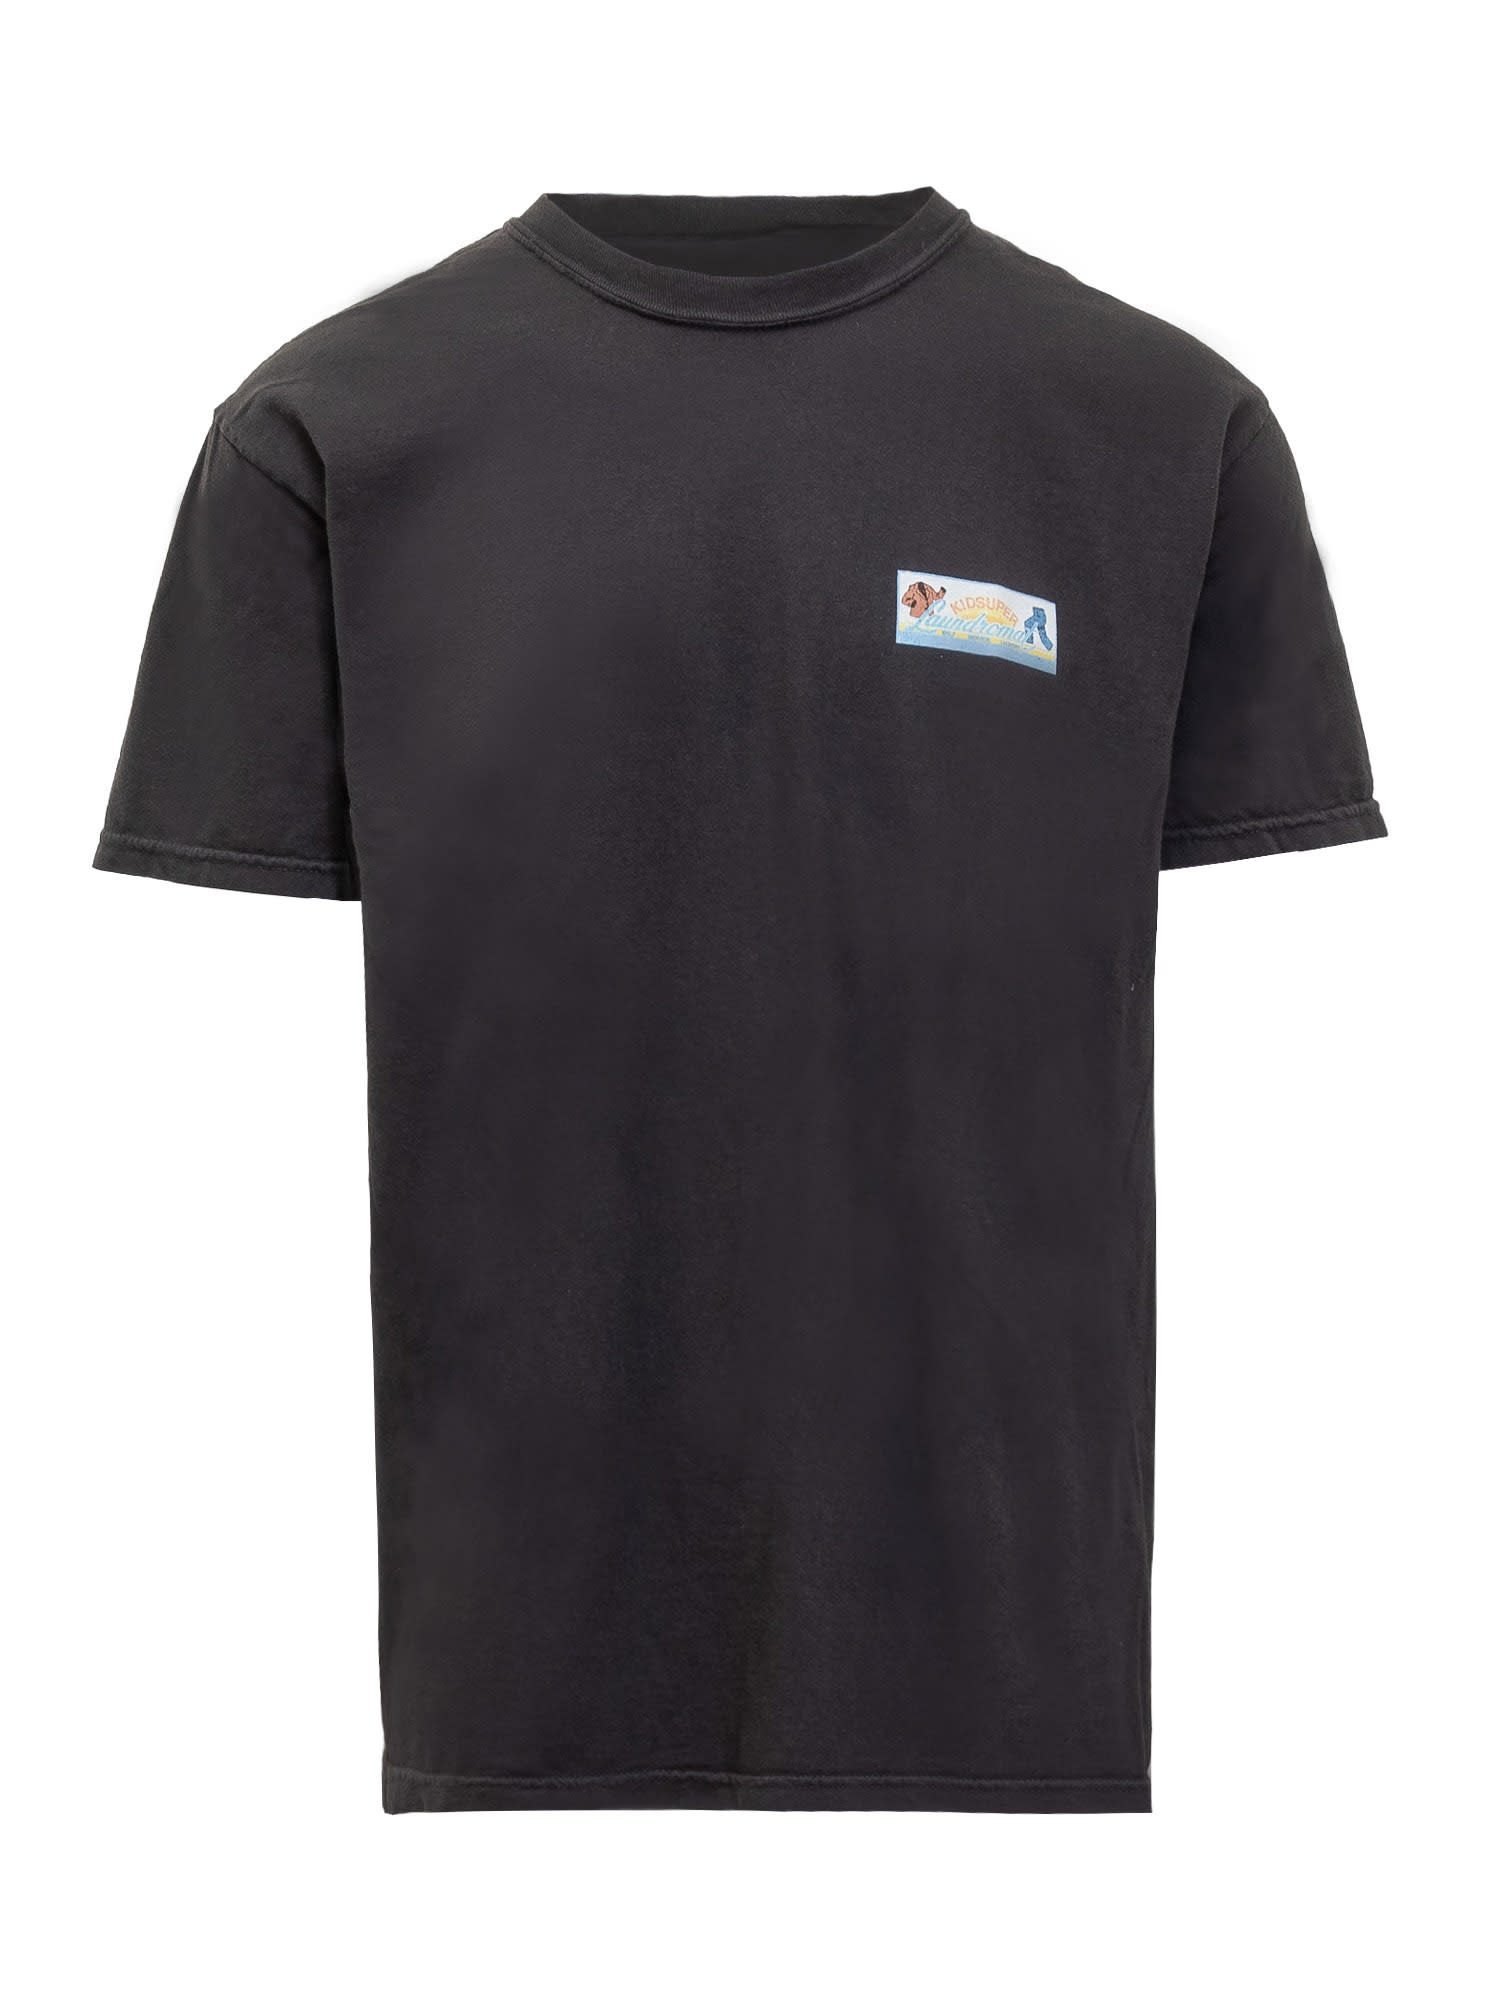 Kidsuper Laundromat T-shirt In Black